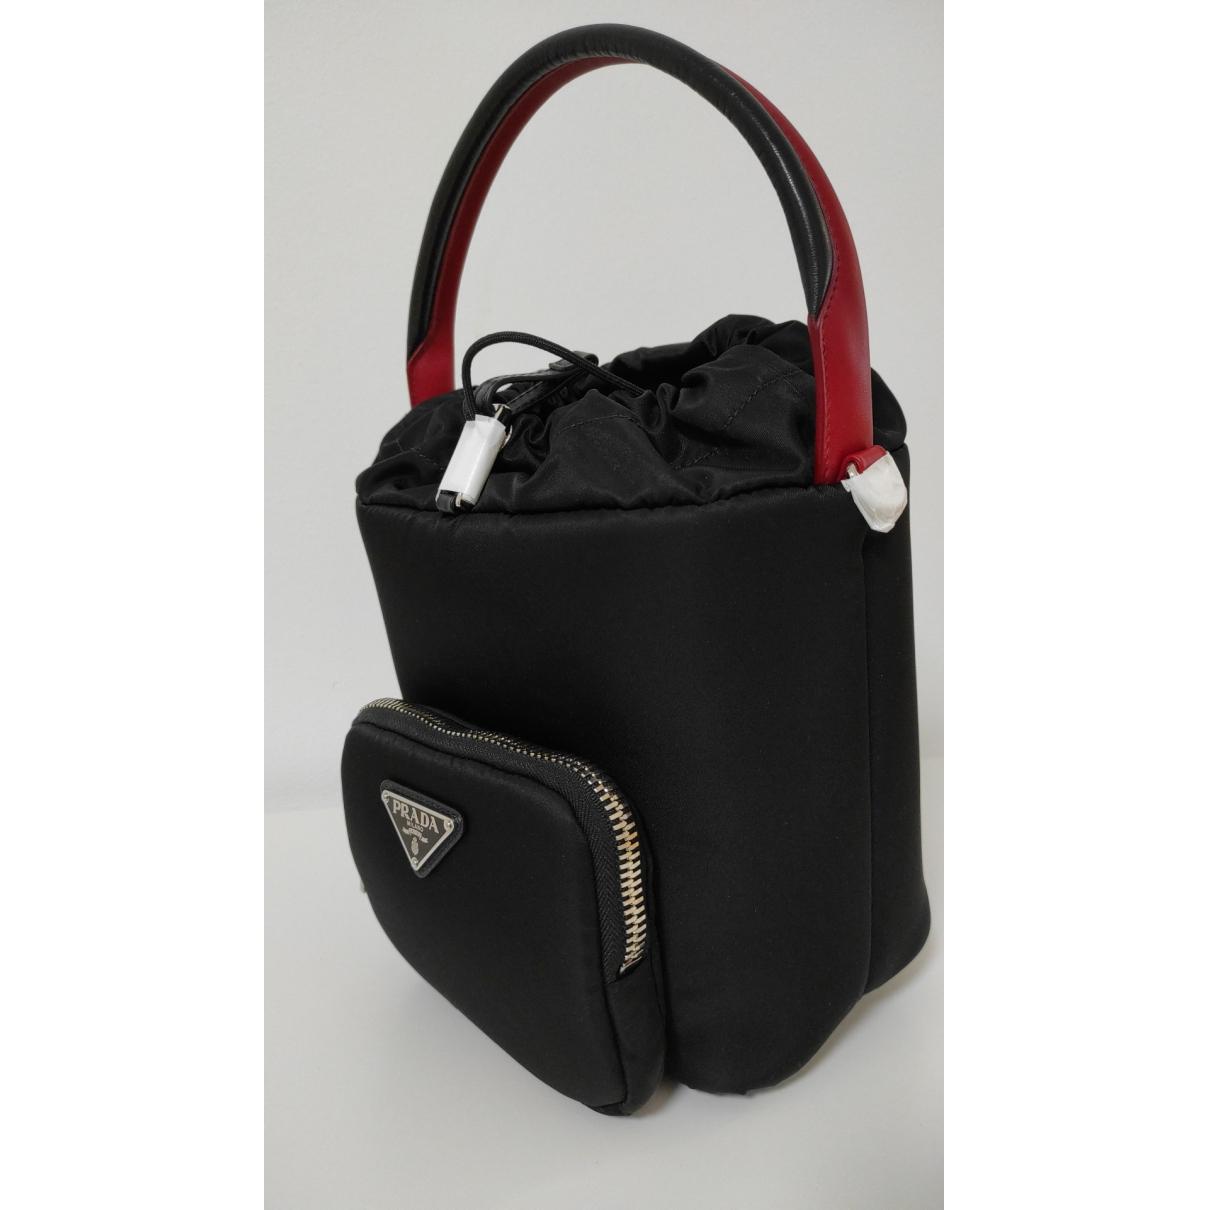 Buy Prada Cargo cloth handbag online